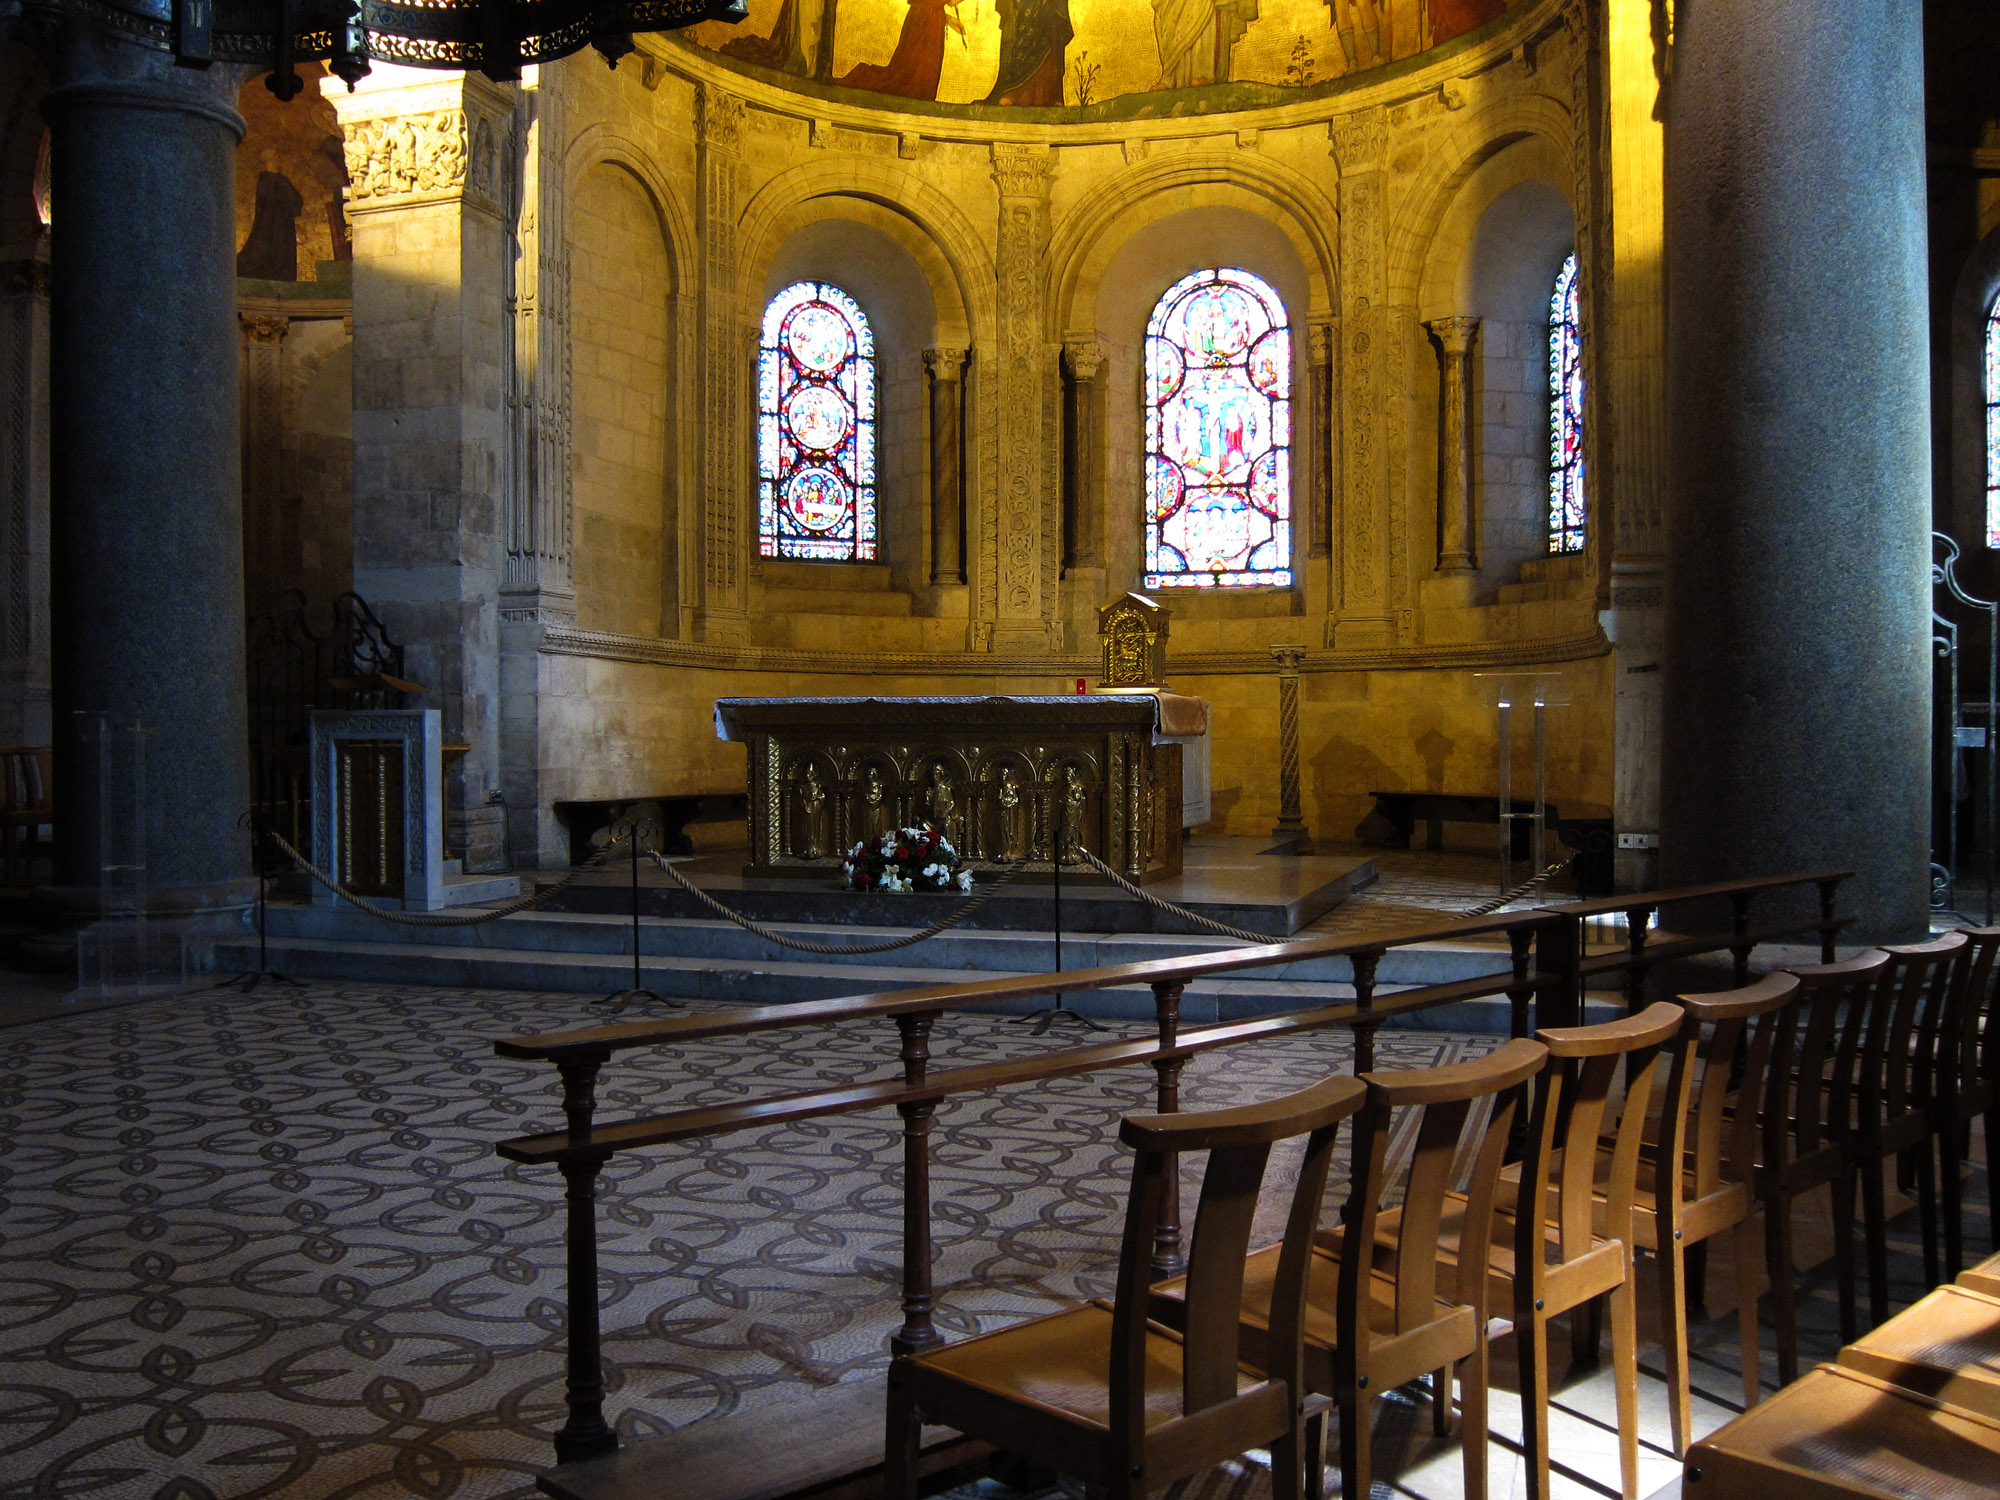 Inside Abbey of St Martin d'Ainay, Lyon France.